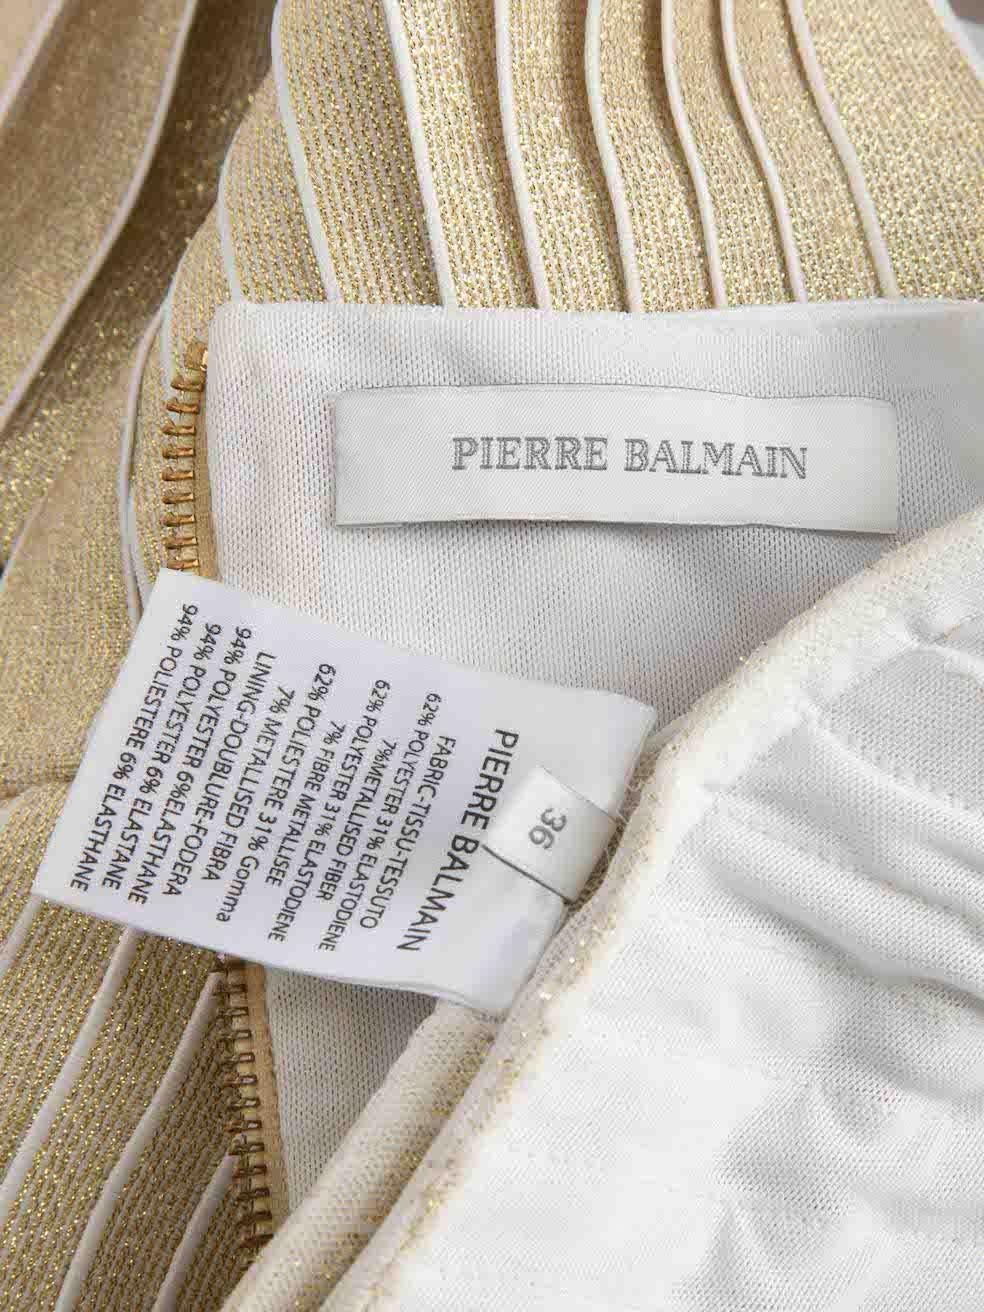 Balmain Women's Pierre Balmain Gold Bandage Bodycon Mini Dress For Sale 1